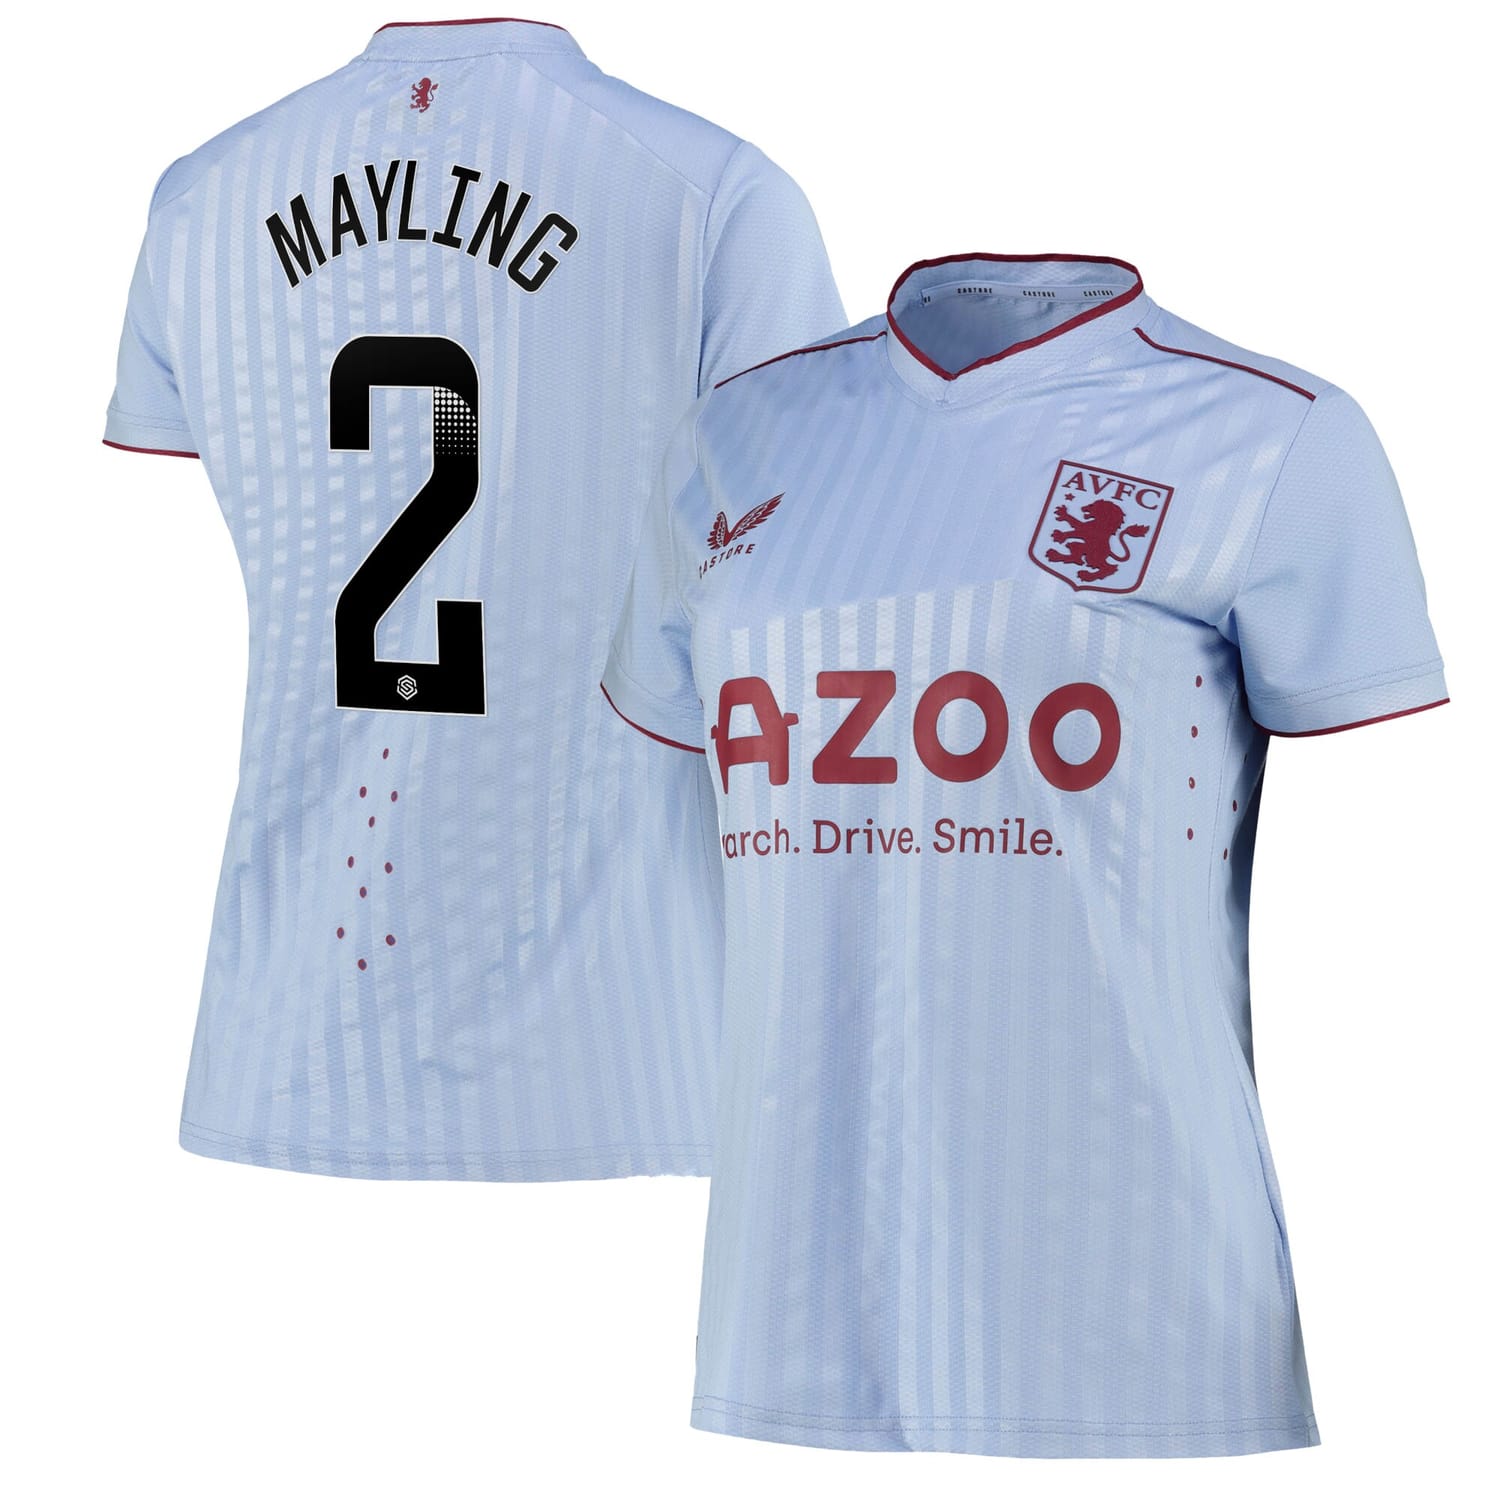 Premier League Aston Villa Away WSL Pro Jersey Shirt 2022-23 player Sarah Mayling 2 printing for Women